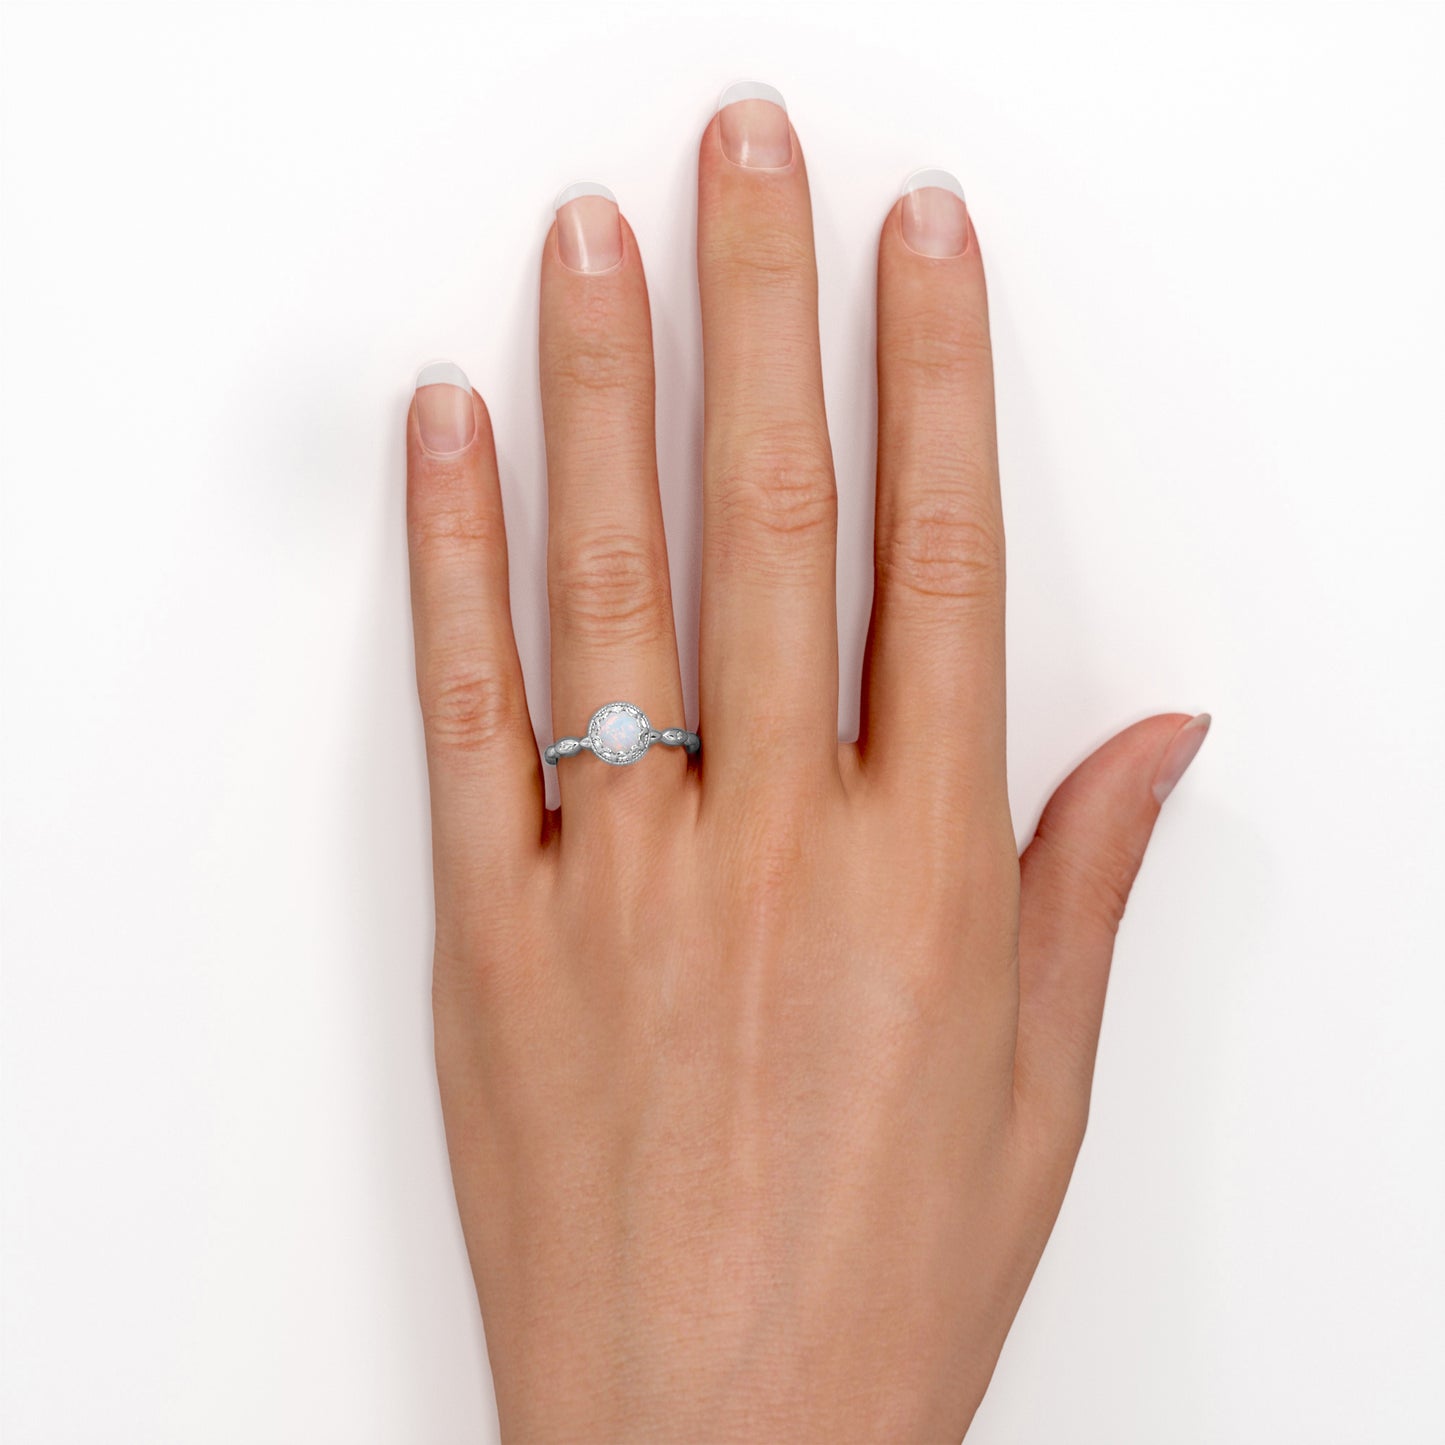 Scalloped halo 1 carat Round cut Ethiopian Opal milgrain edge engagement ring in Rose gold